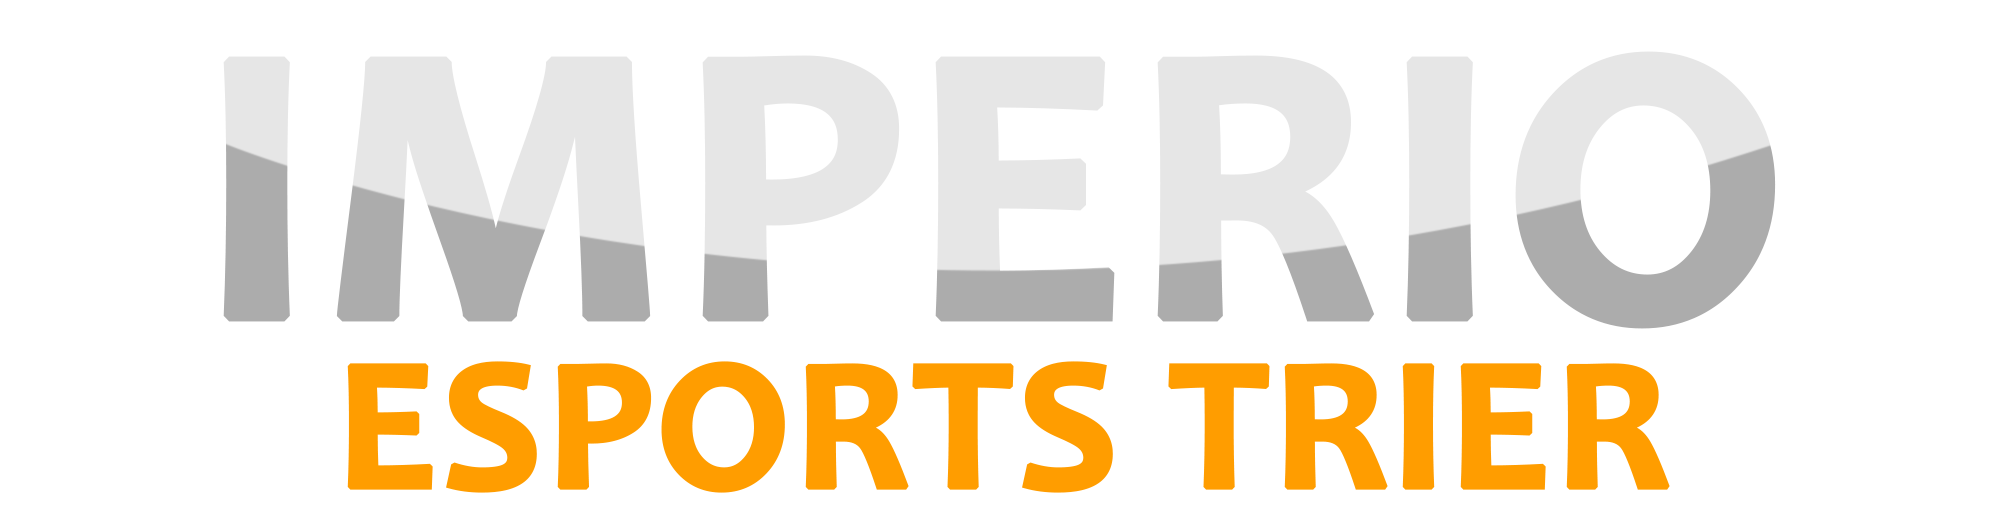 Imperio eSports Trier